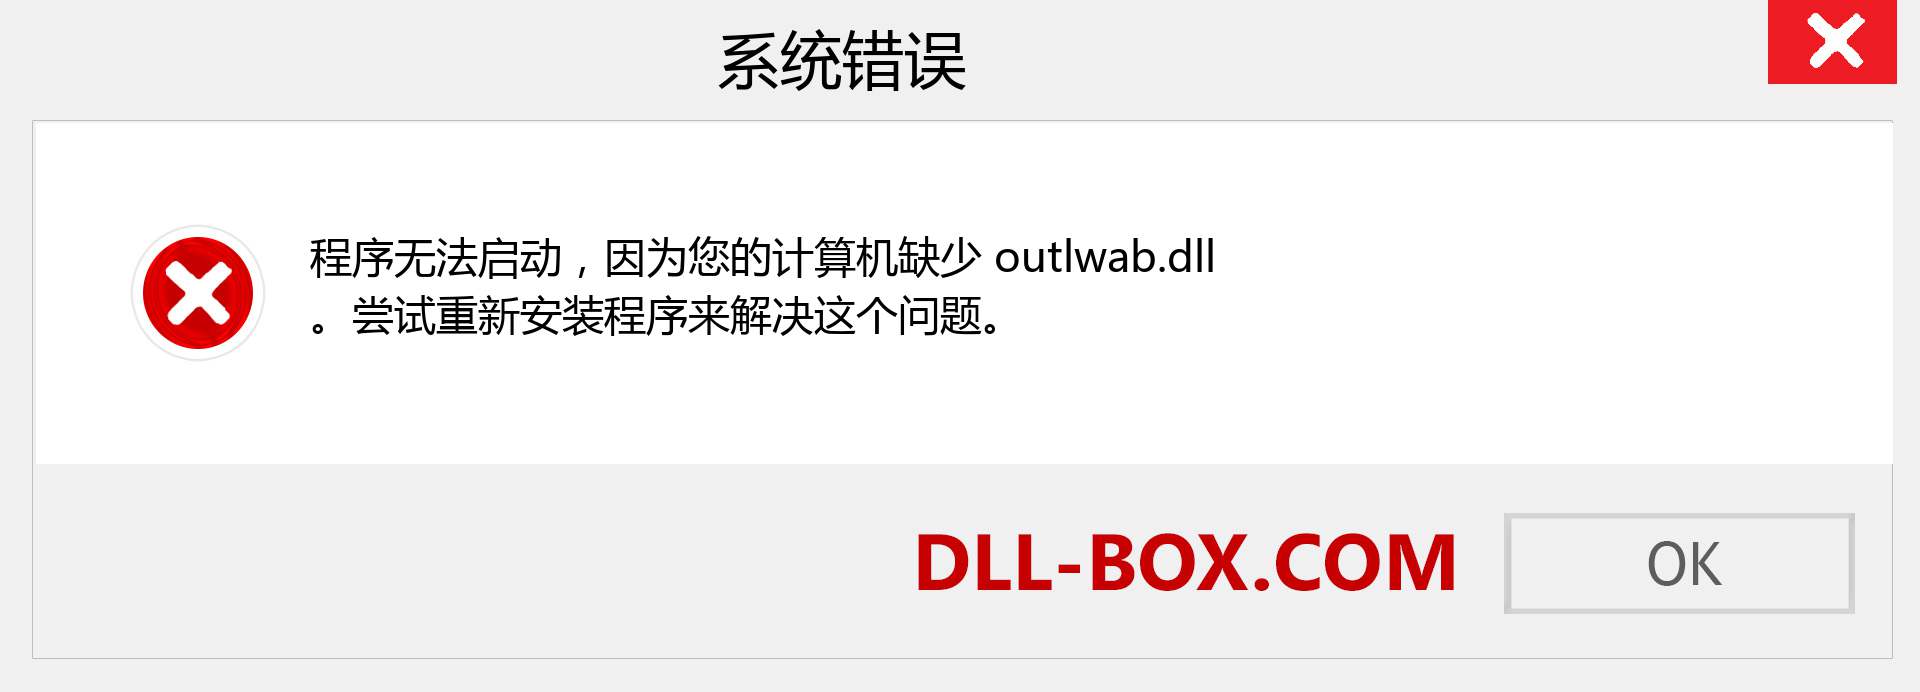 outlwab.dll 文件丢失？。 适用于 Windows 7、8、10 的下载 - 修复 Windows、照片、图像上的 outlwab dll 丢失错误